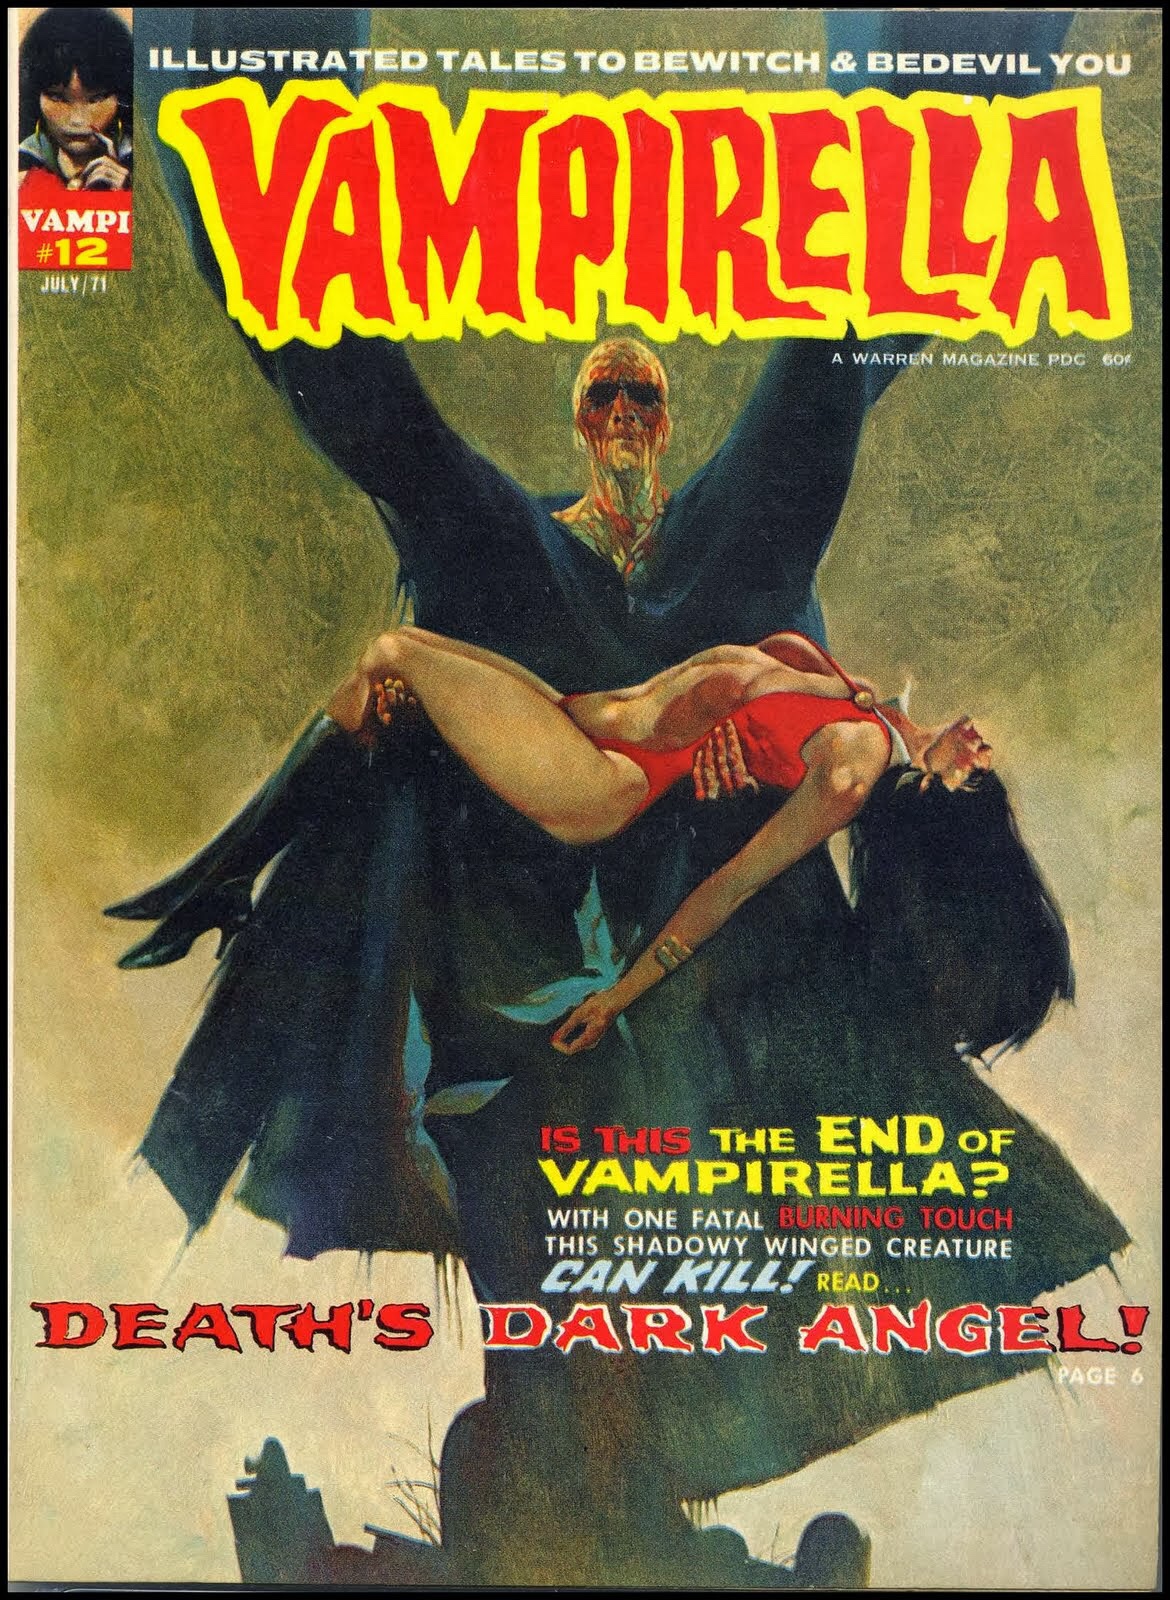 Cover for Warren Publishing’s Vampirella #12 by Sanjulián